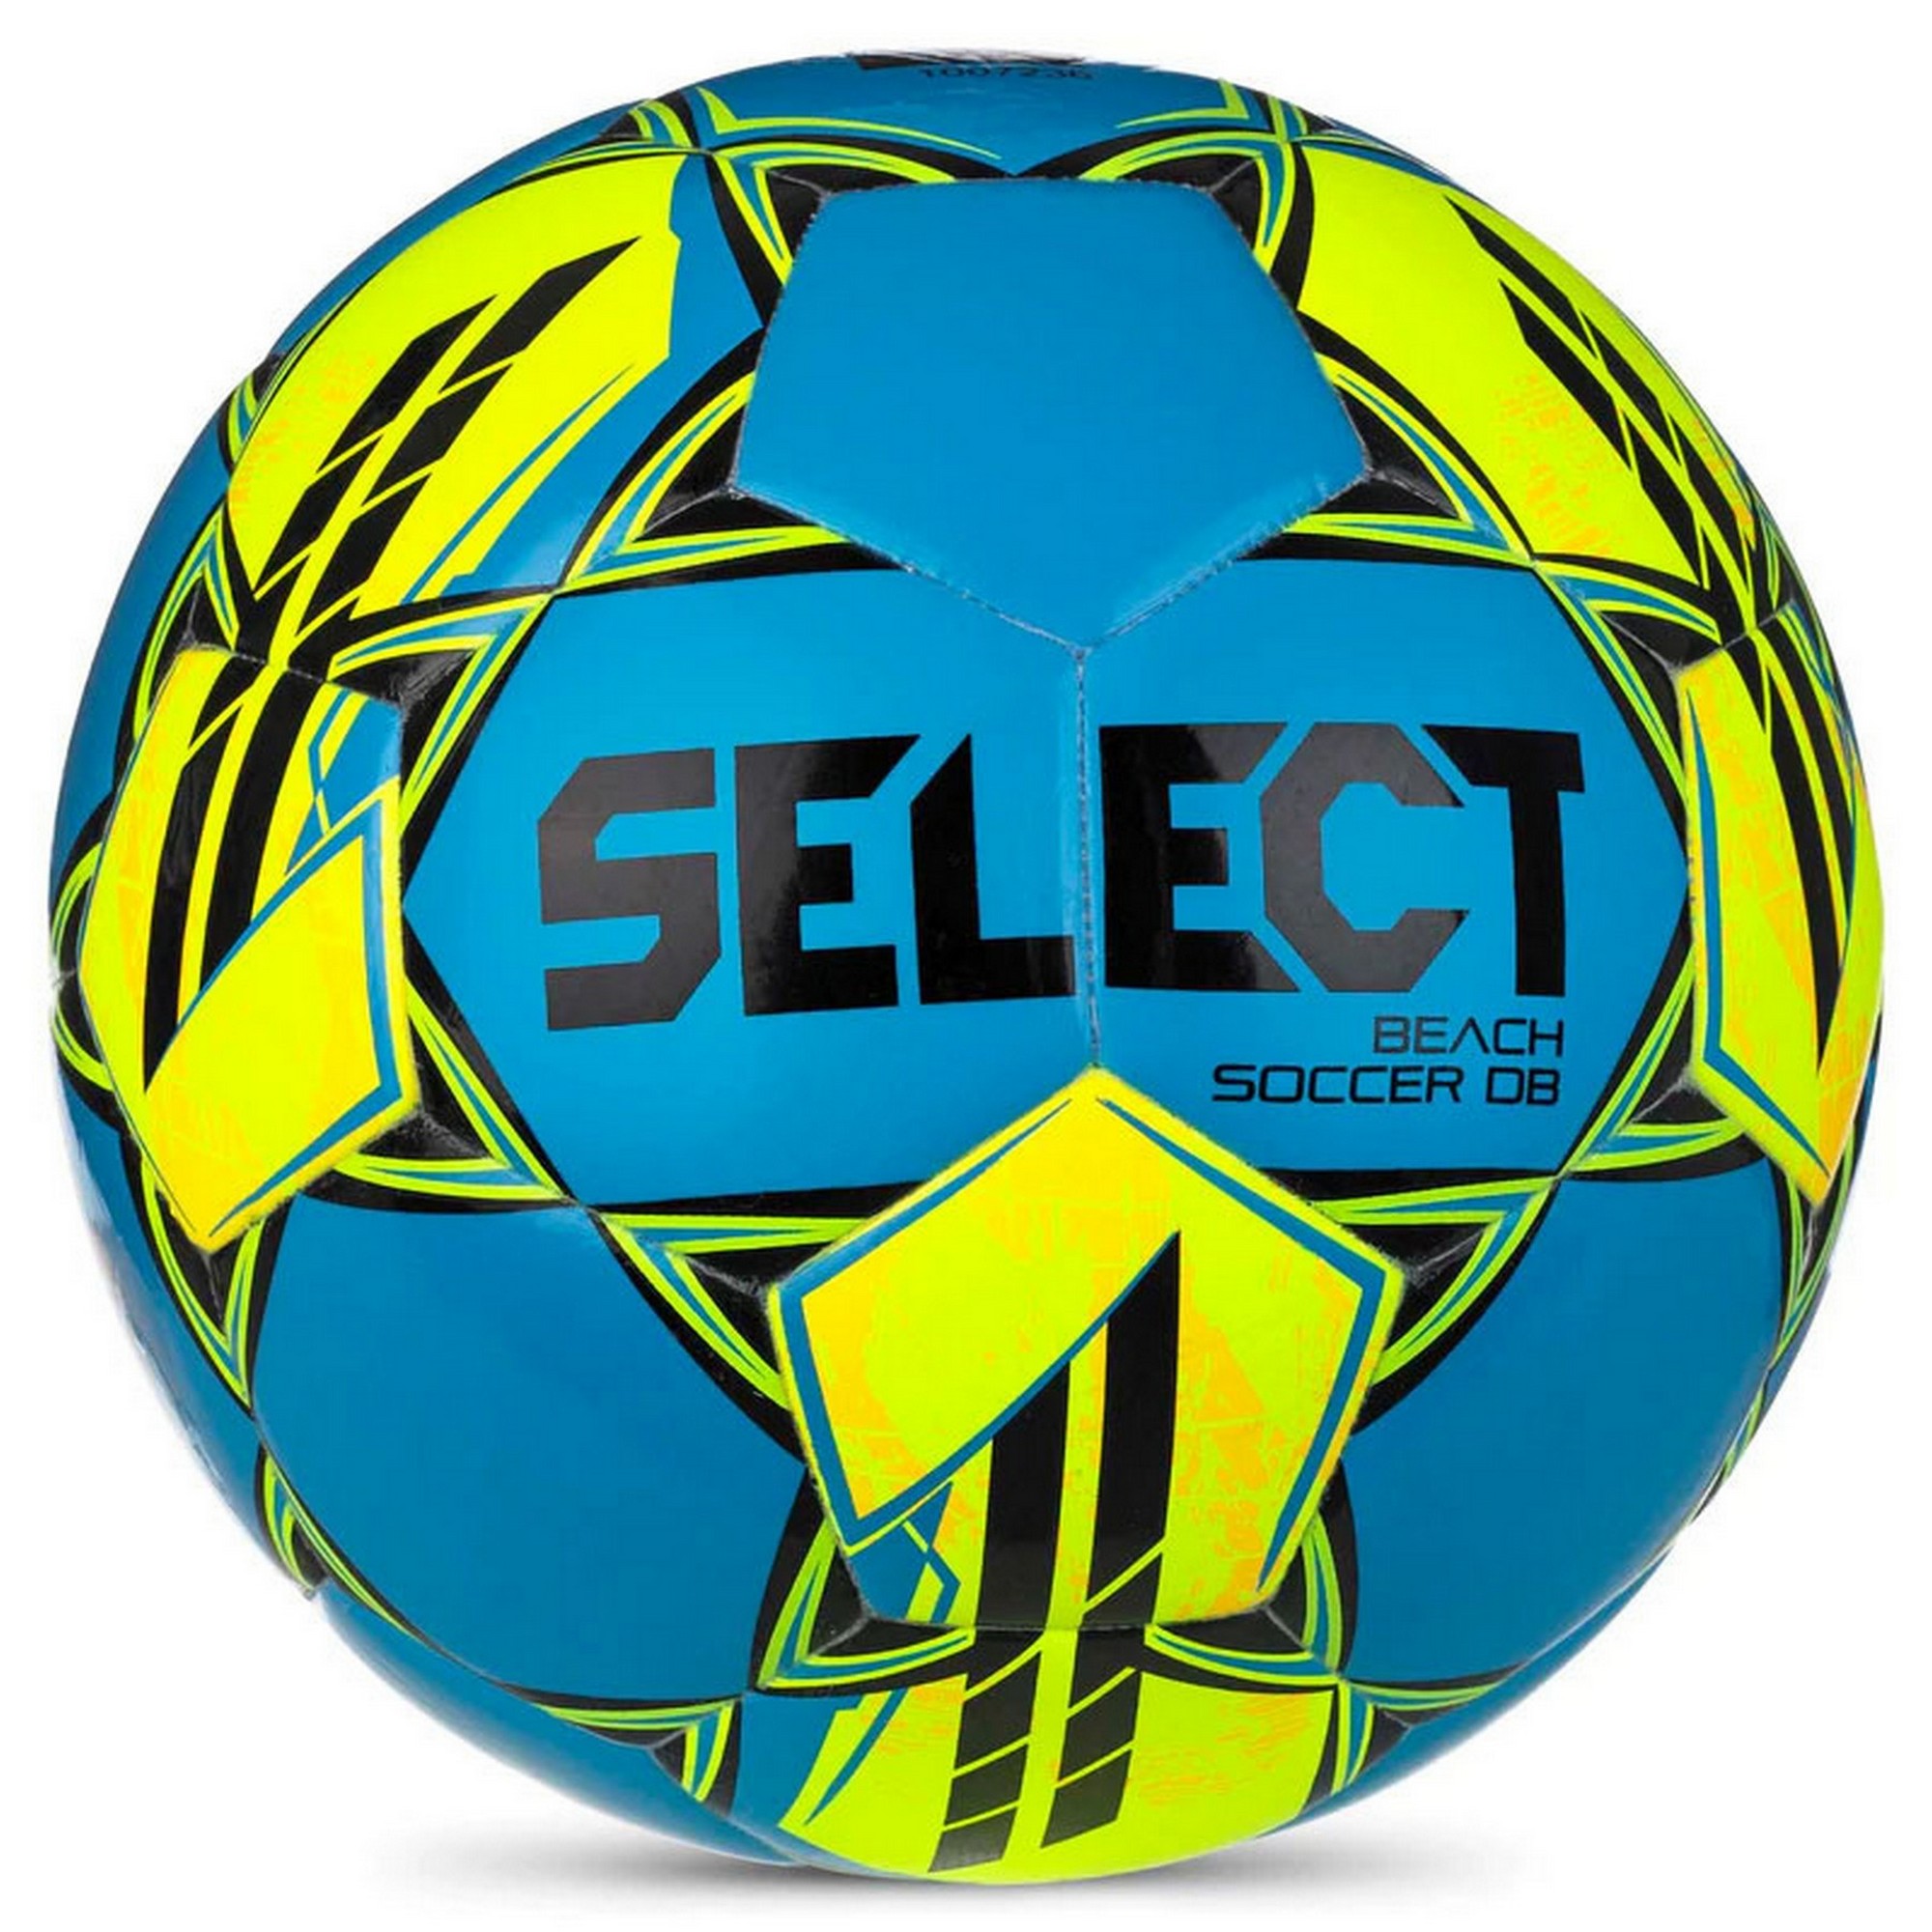     Select Beach Soccer DB 0995160225 .5